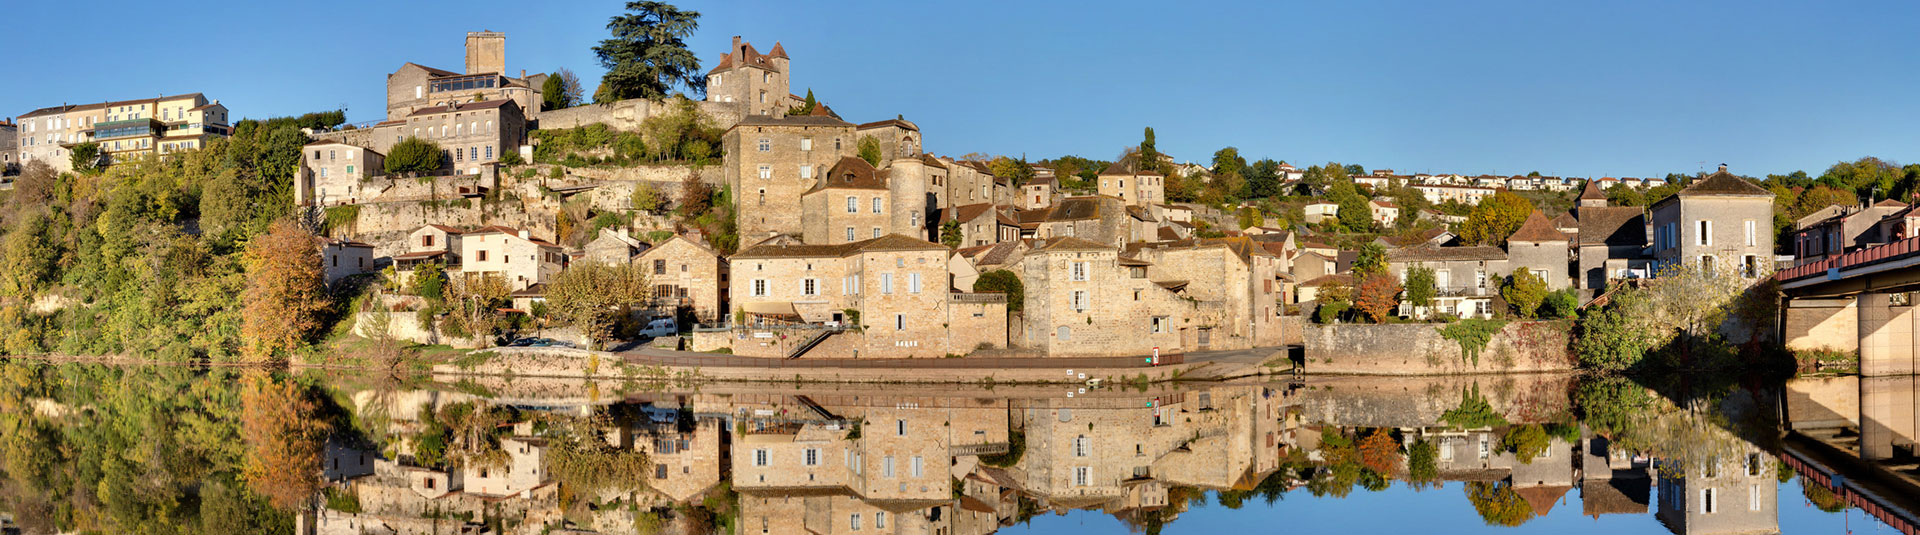 Puy L'Evêque, sitio histórico d'Occitanie